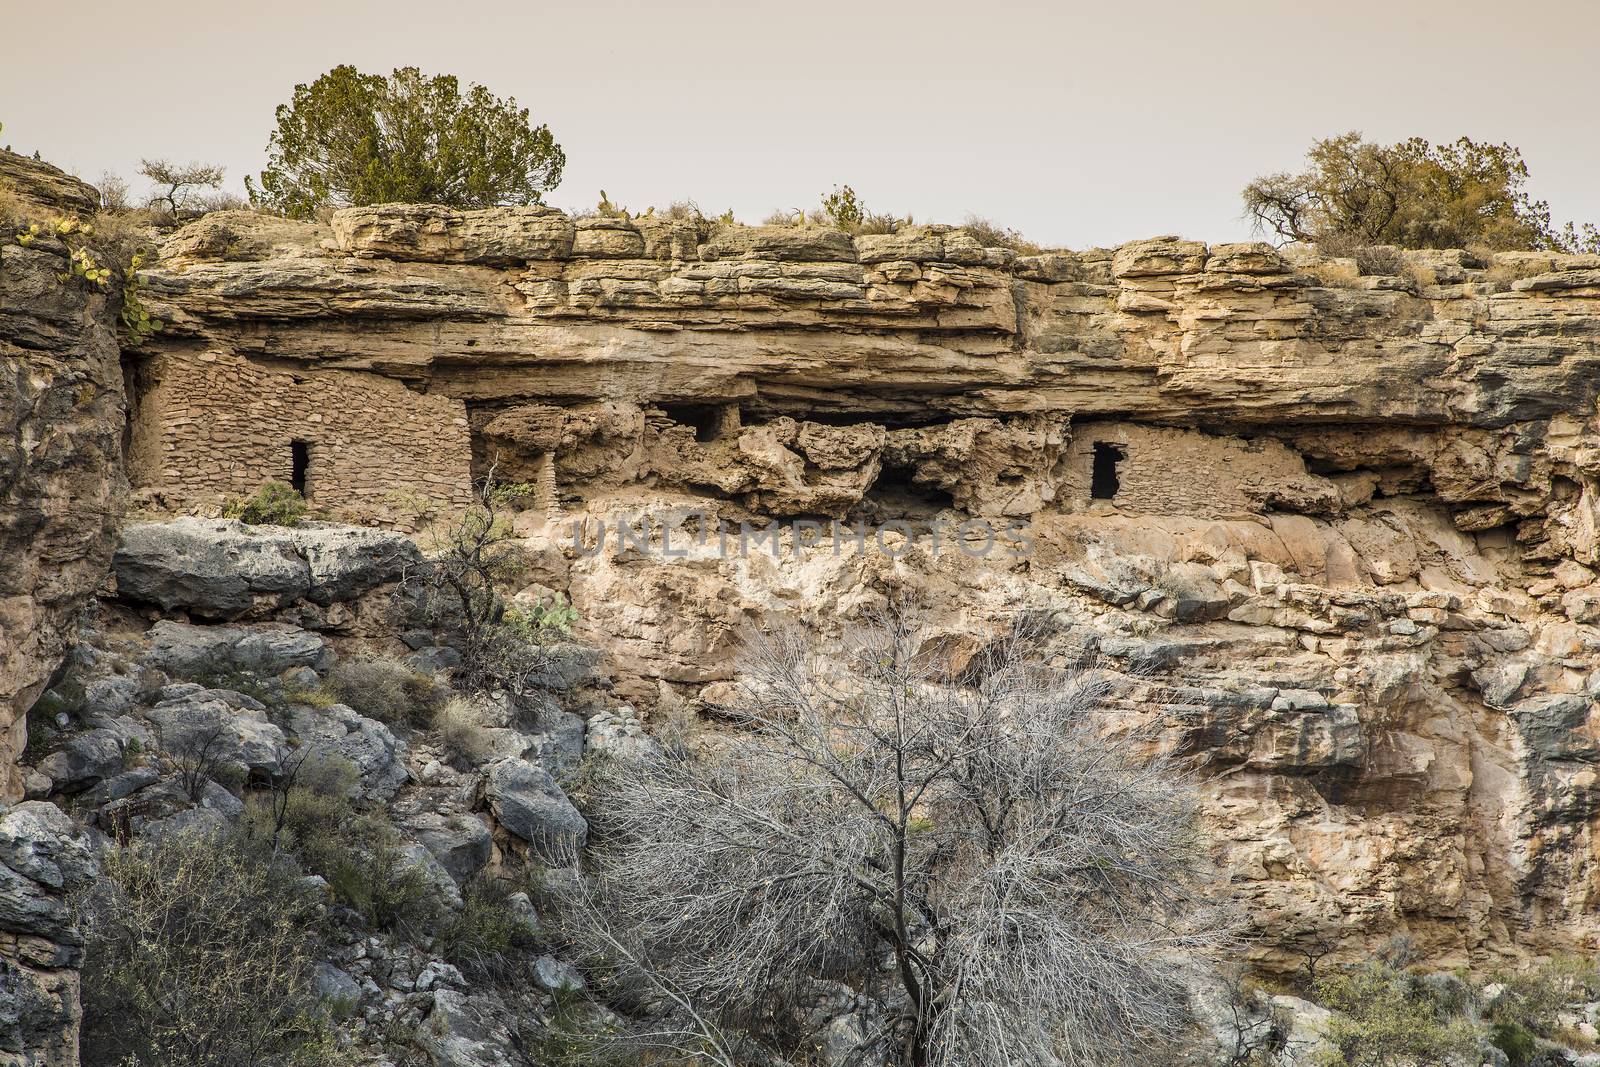 Sinagua cliff dwellings at Montezuma Well in modern Arizona